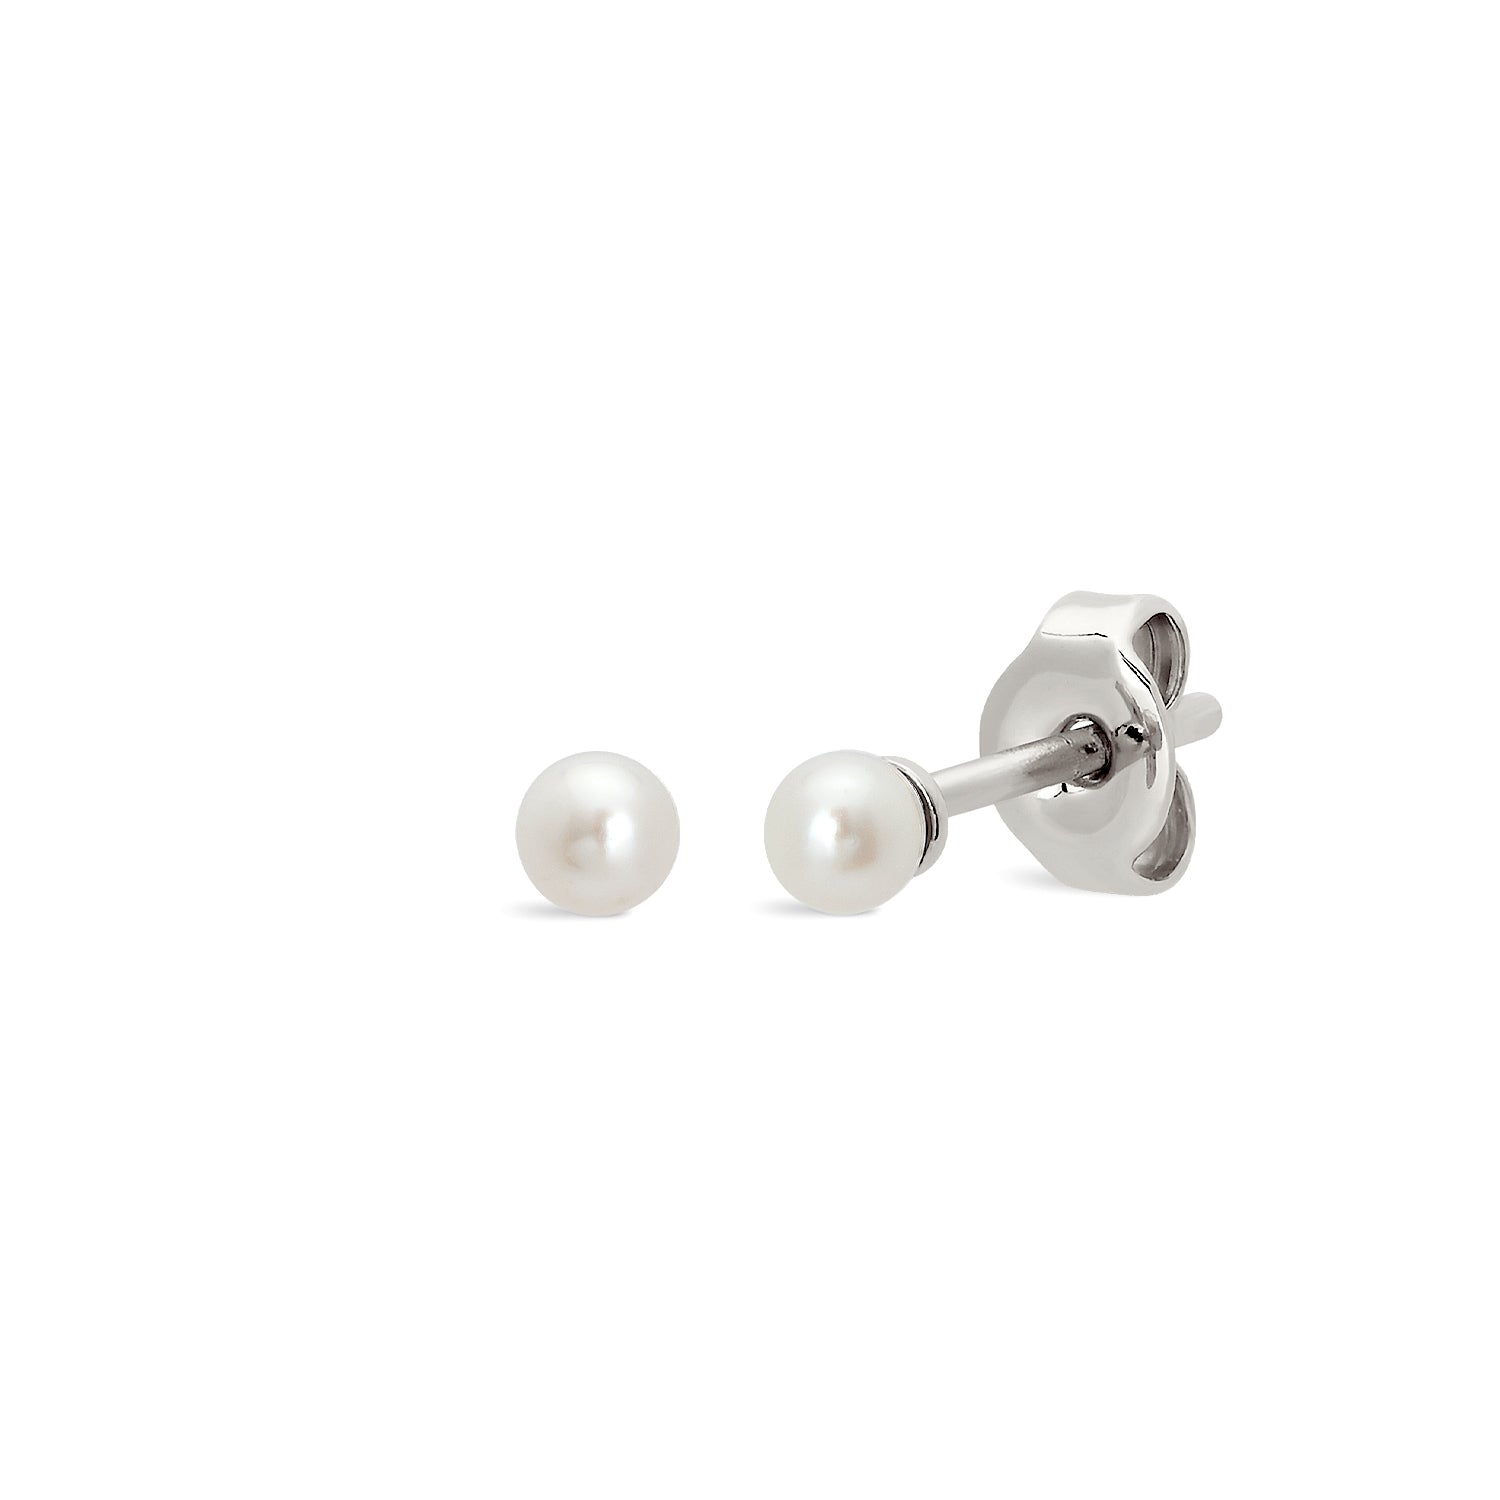 NEW 925 Pearl Stud Sterling Silver Earrings